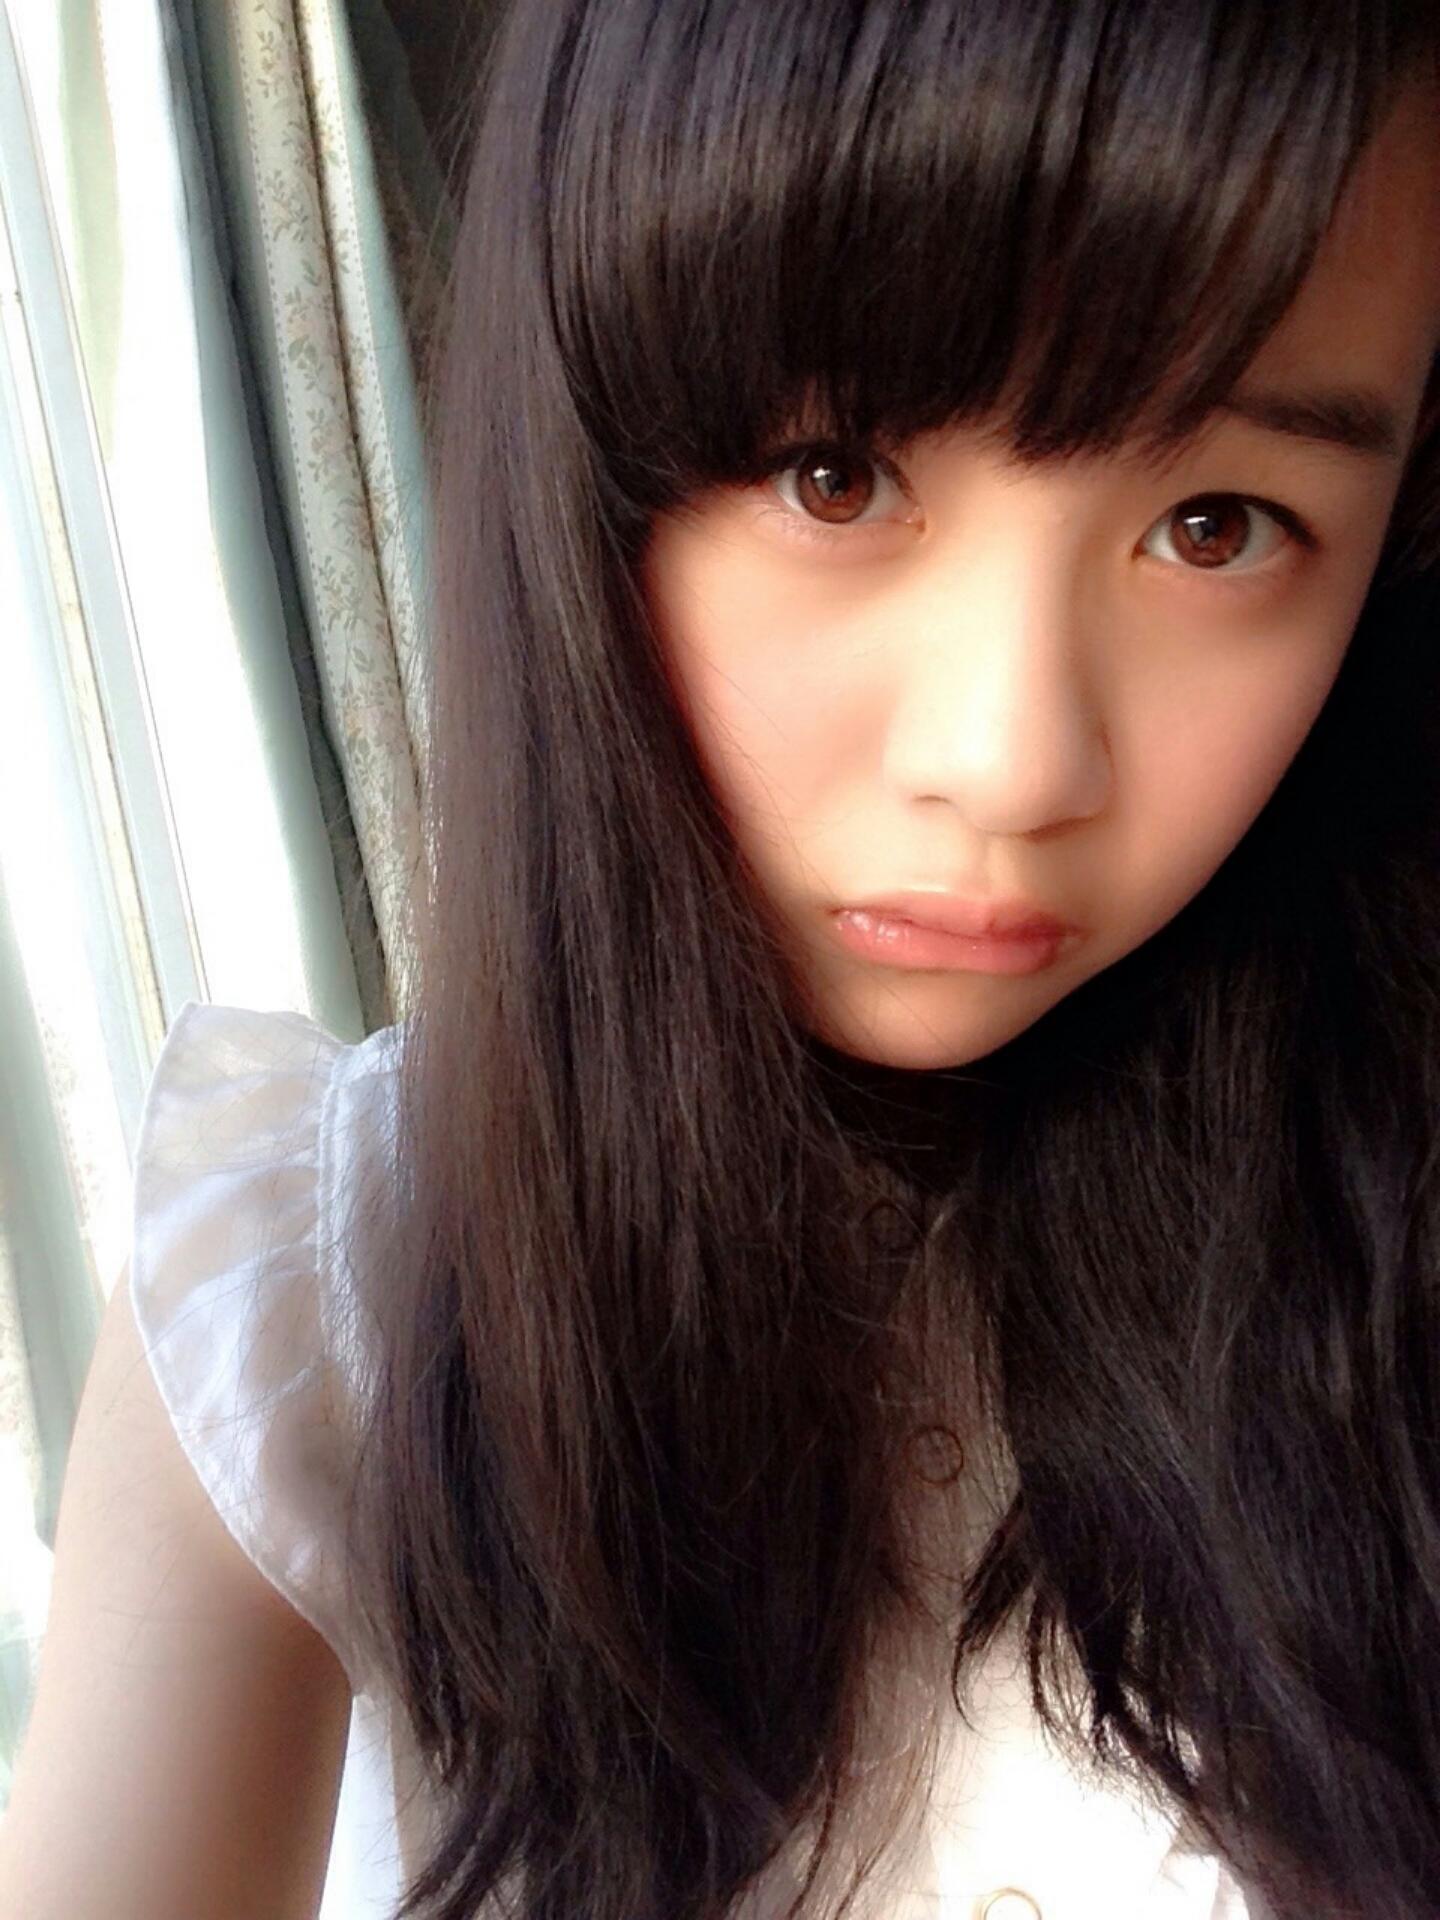 【AKB48チーム8】横山結衣応援スレ★8【ヨコちゃん】©2ch.net YouTube動画>34本 ->画像>1089枚 